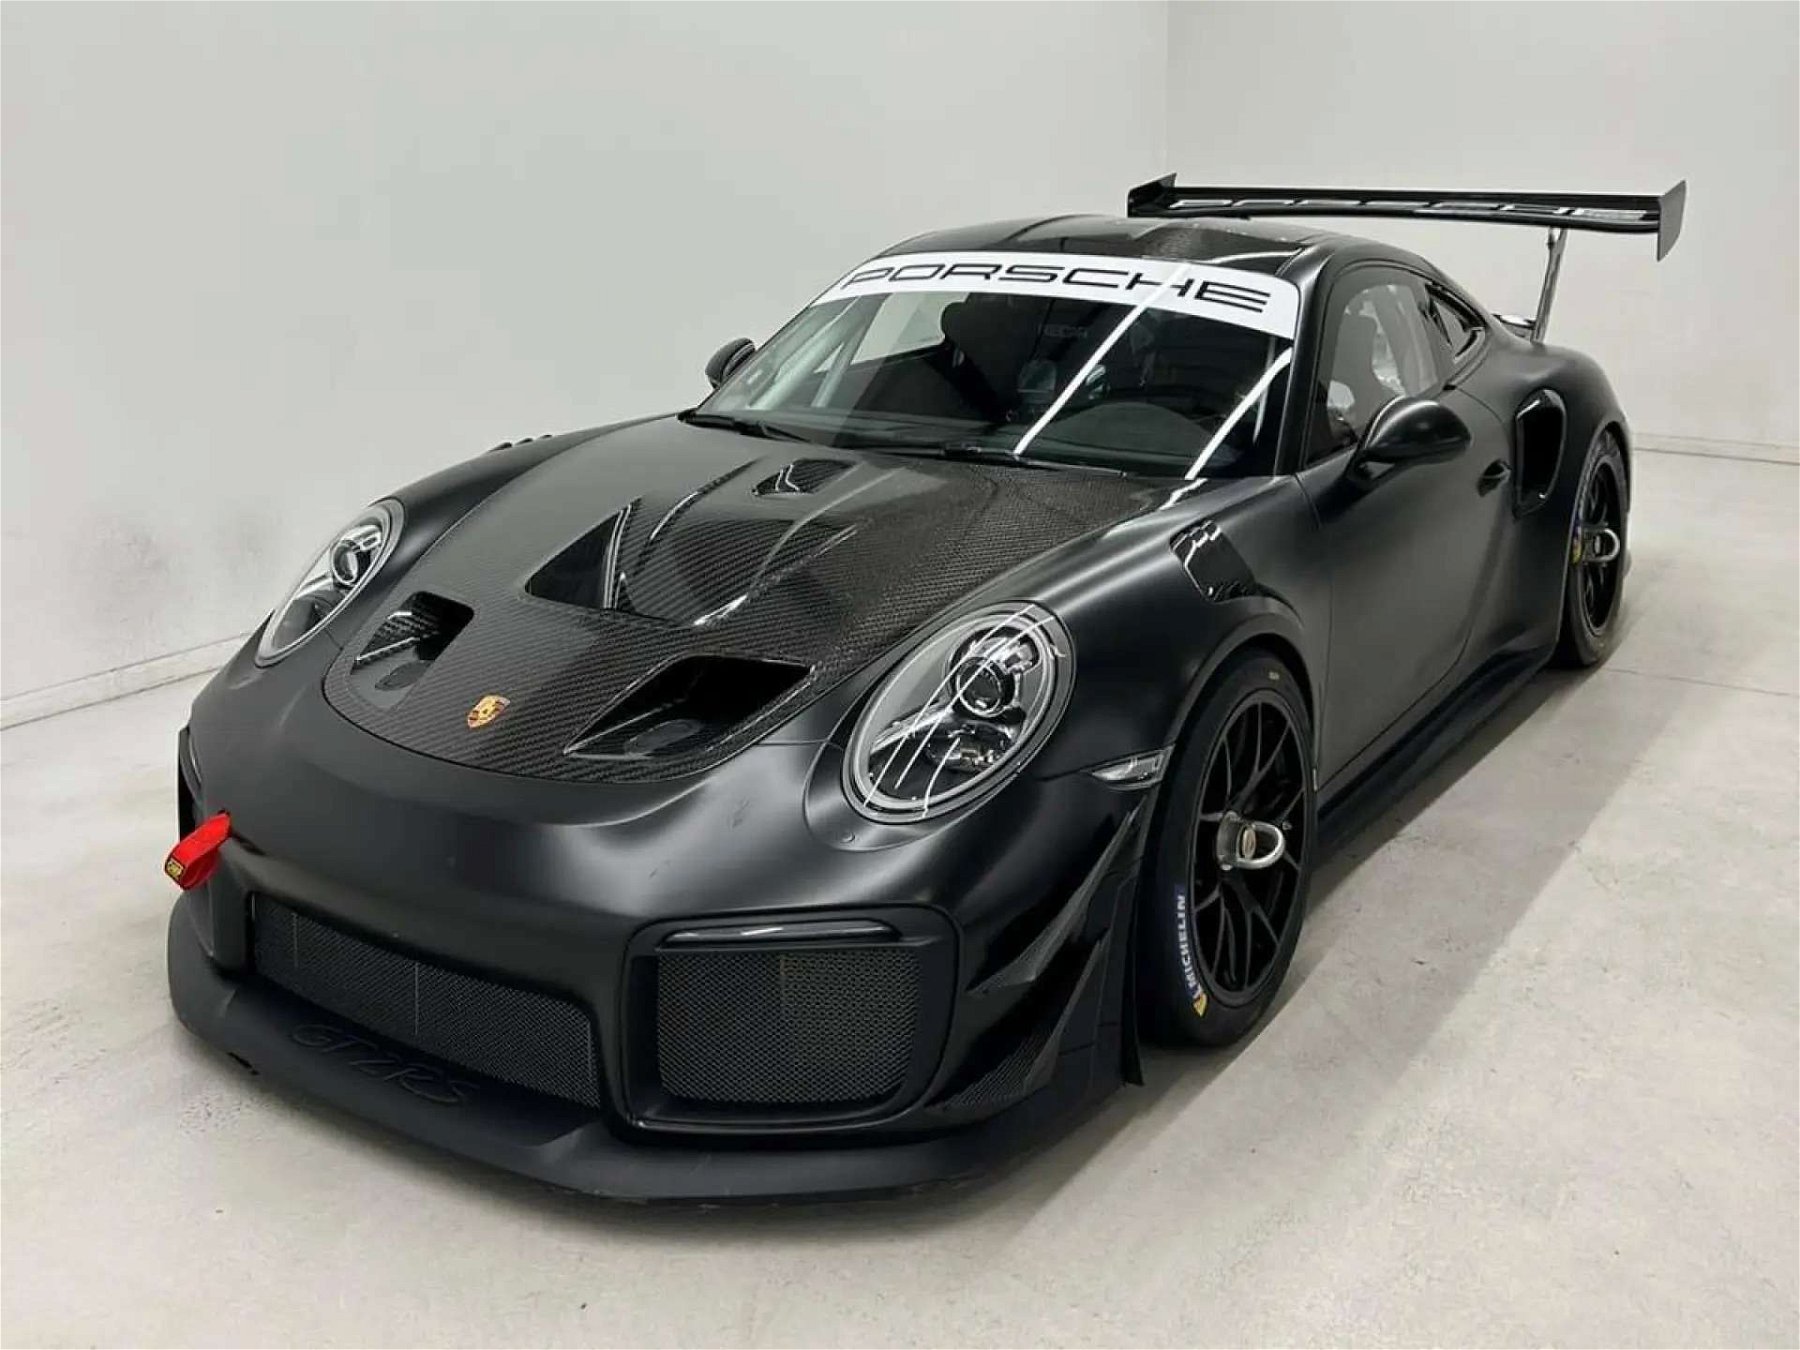 Porsche 911 (991) - Wikipedia